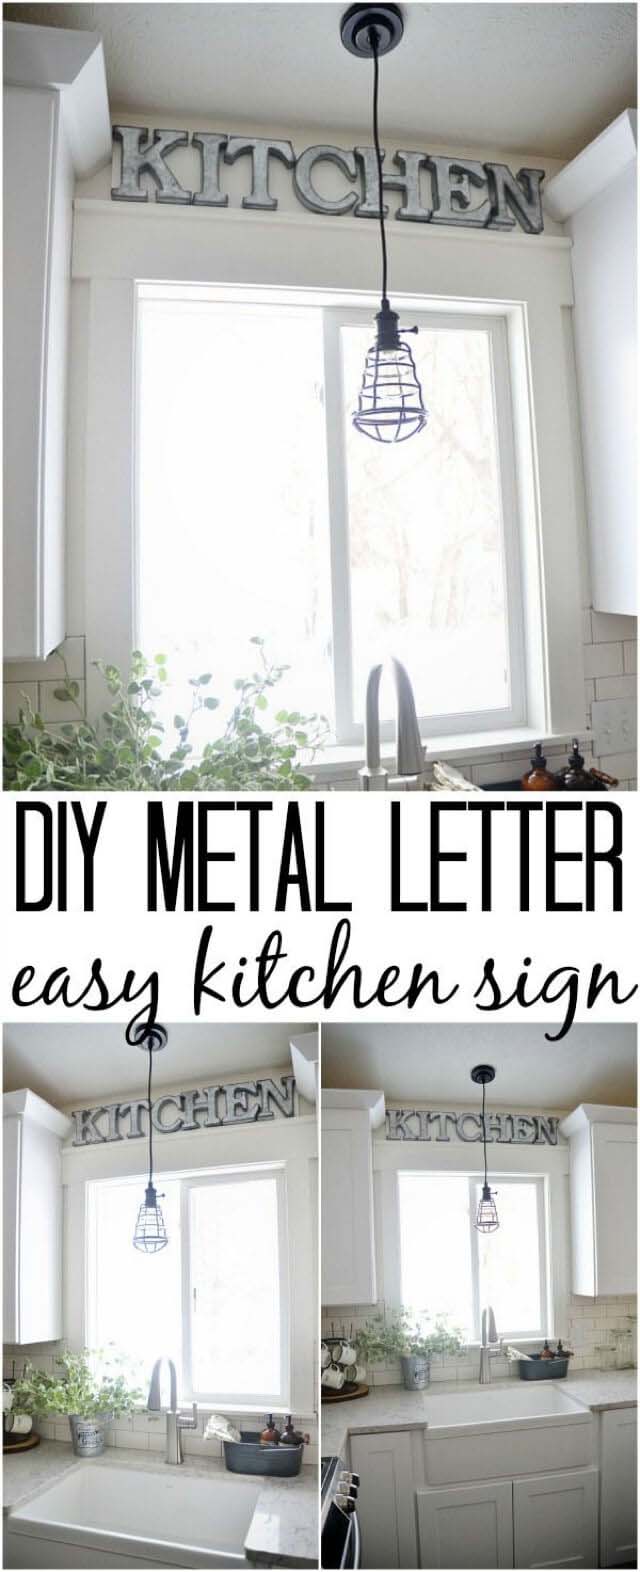 DIY Metal Letter Kitchen Sign #walldecor #kitchen #decorhomeideas